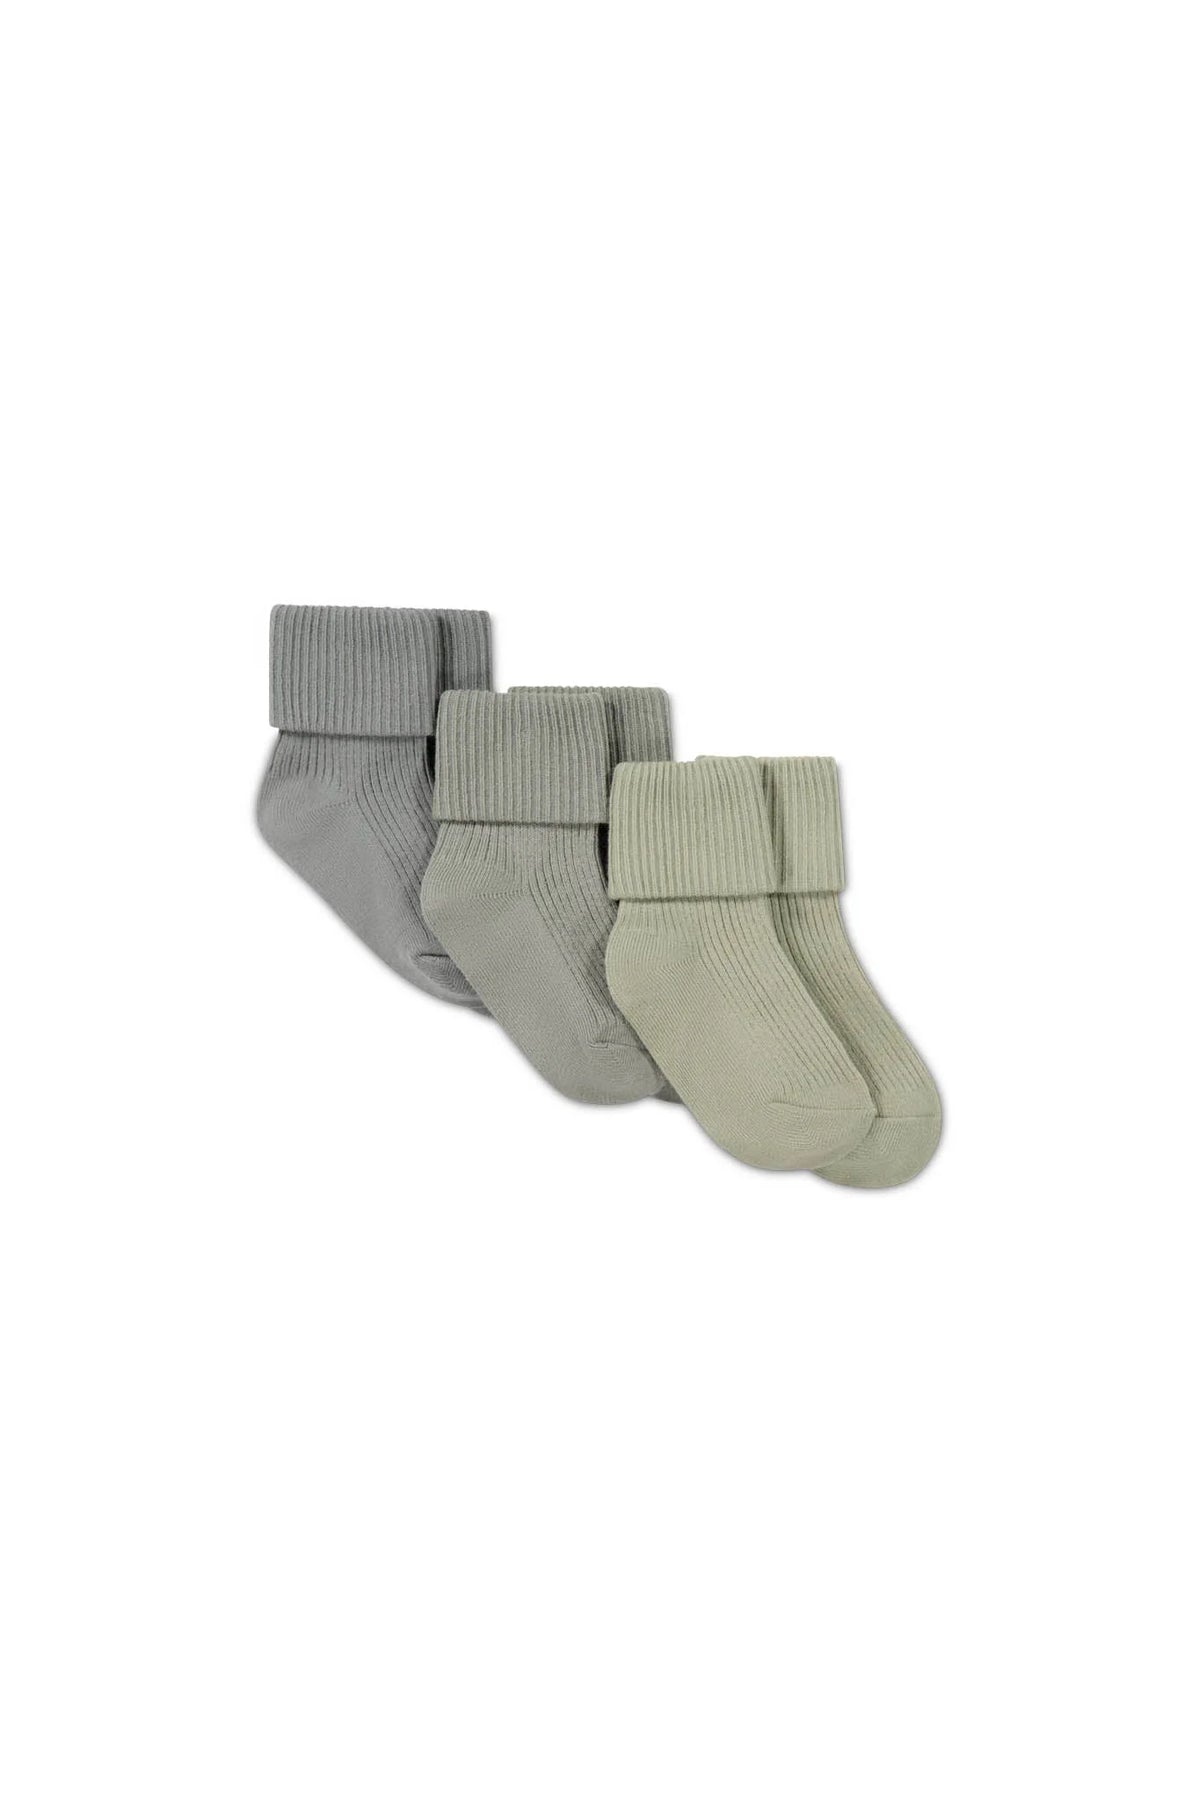 3PK Rib Sock | Sage/Moss/Clay